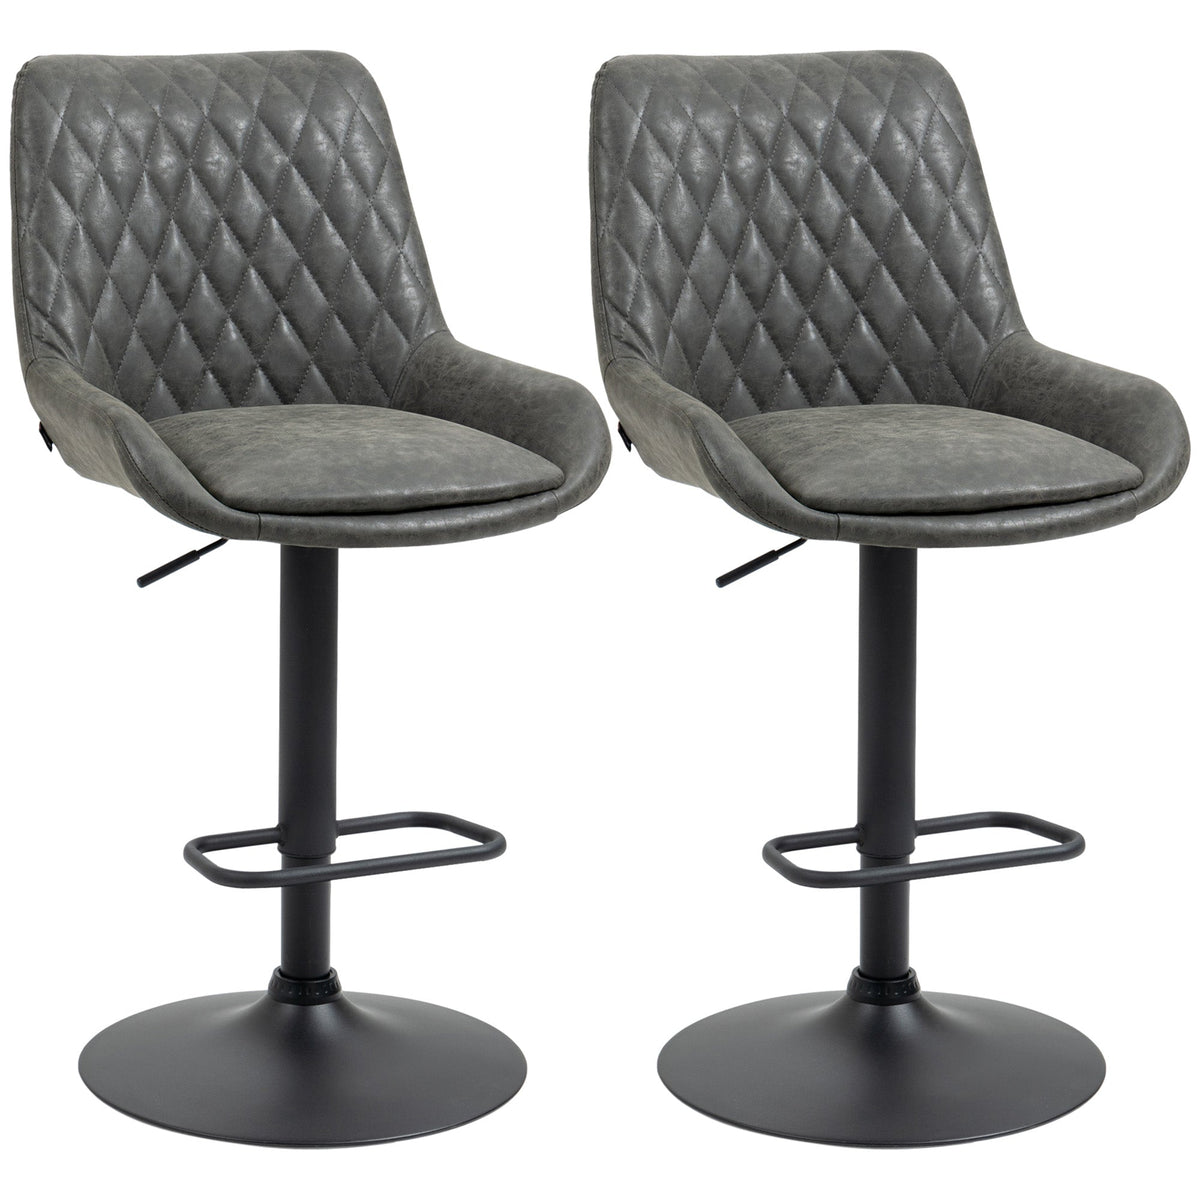 HOMCOM Retro Bar Stools Set of 2, Adjustable Kitchen Stool, Upholstered Bar Chairs with Back, Swivel Seat, Dark Grey - TovaHaus